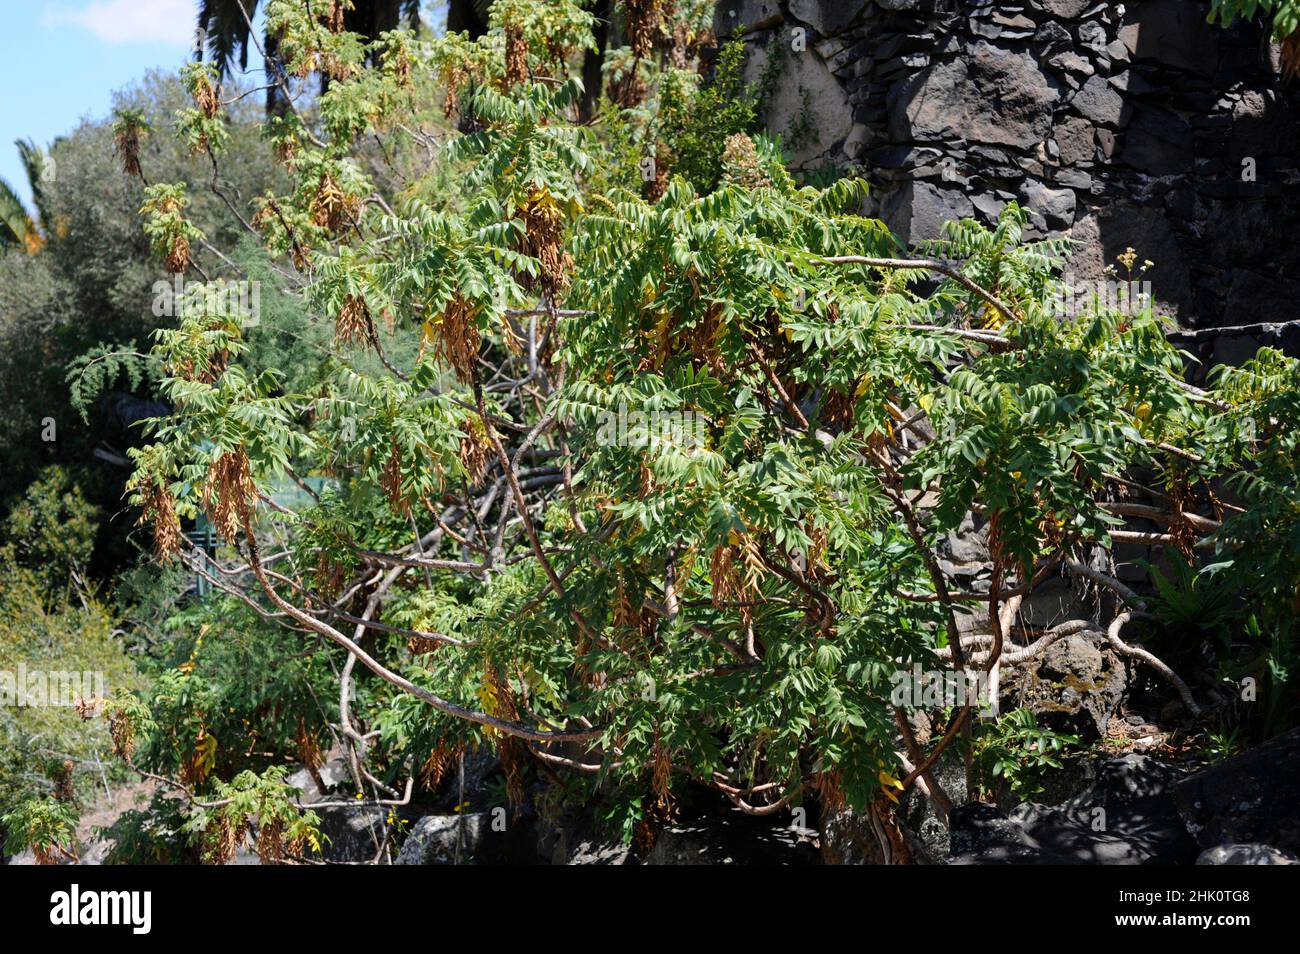 Bencomia de El Hierro (Bencomia sphaerocarpa) is an endangered shrub endemic to El Hierro, Canary Islands, Spain. Stock Photo